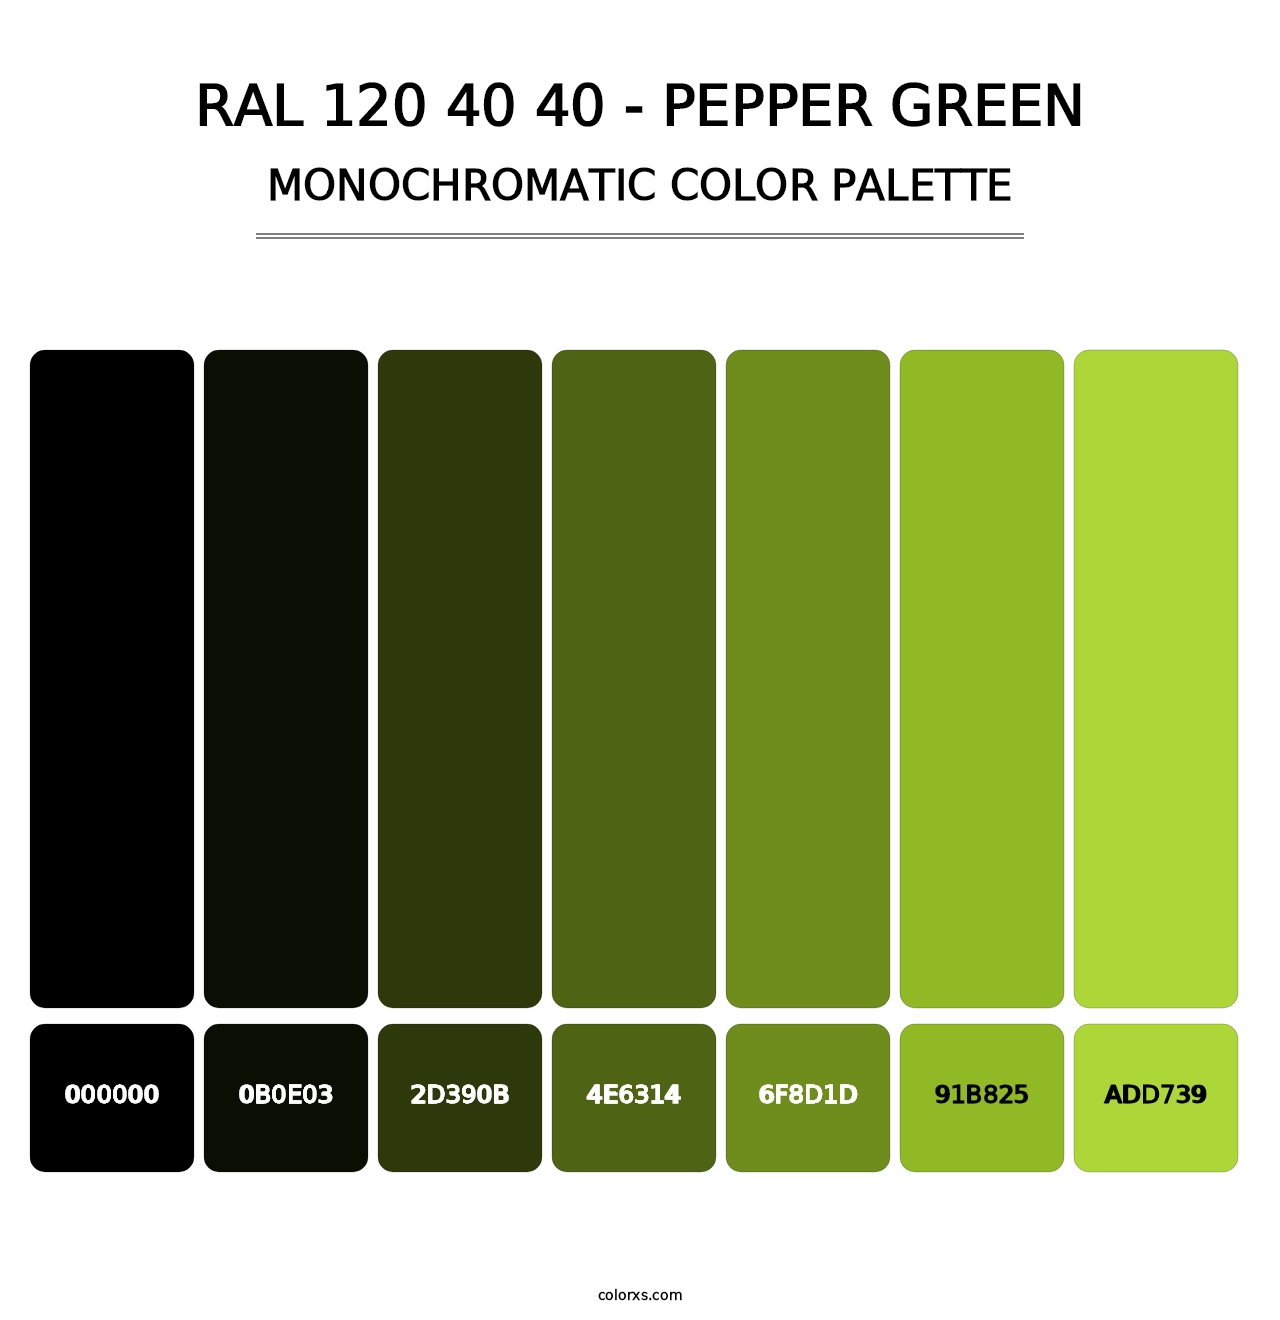 RAL 120 40 40 - Pepper Green - Monochromatic Color Palette